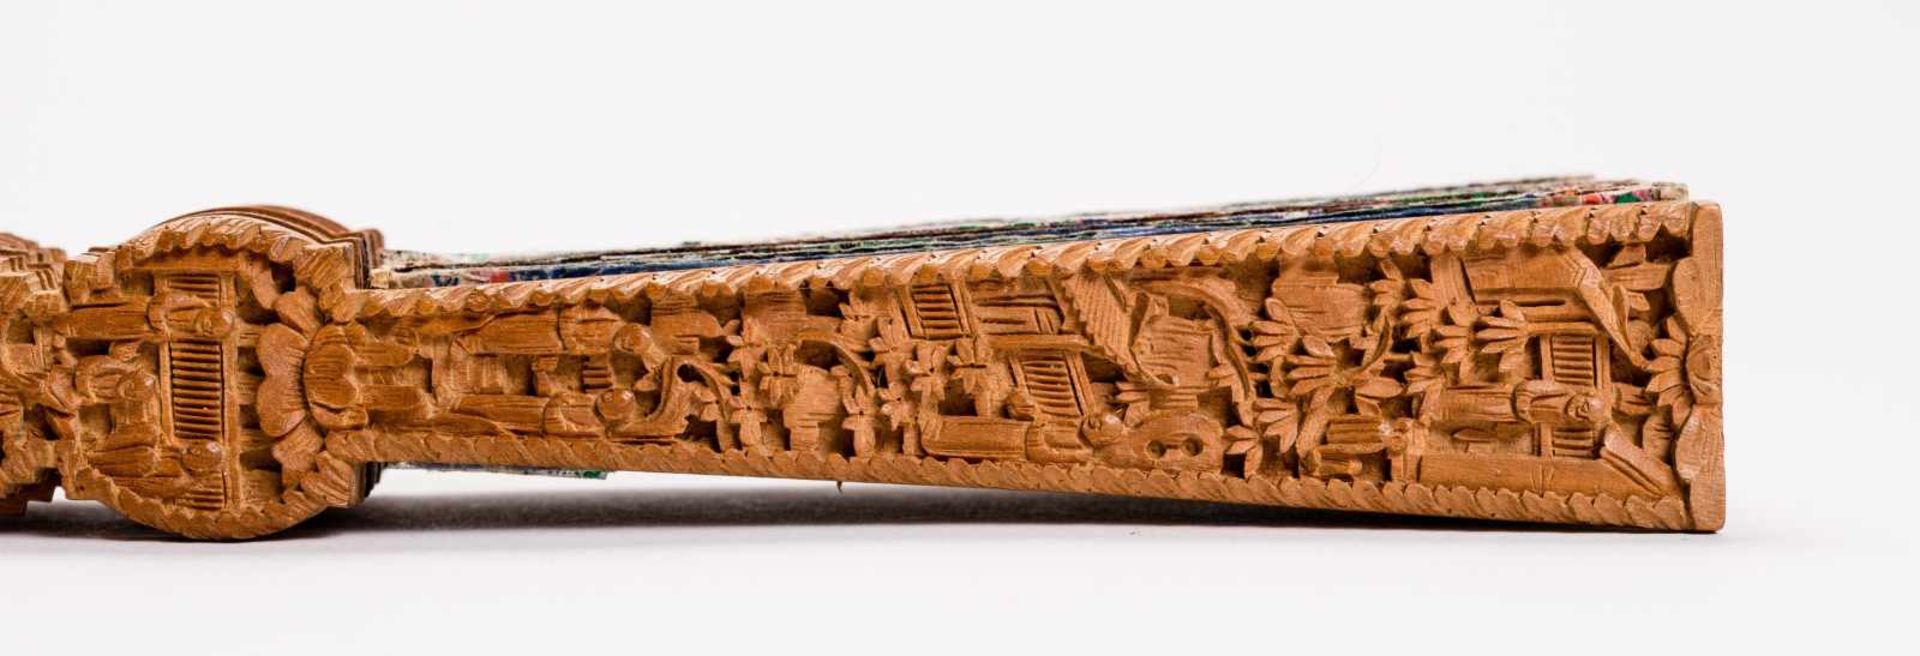 MANDARINE FOLDING FAN WITH FIGURATIVE SCENES Gouache, silk, ivory, wood. China, late Qing Dynasty ( - Image 4 of 7